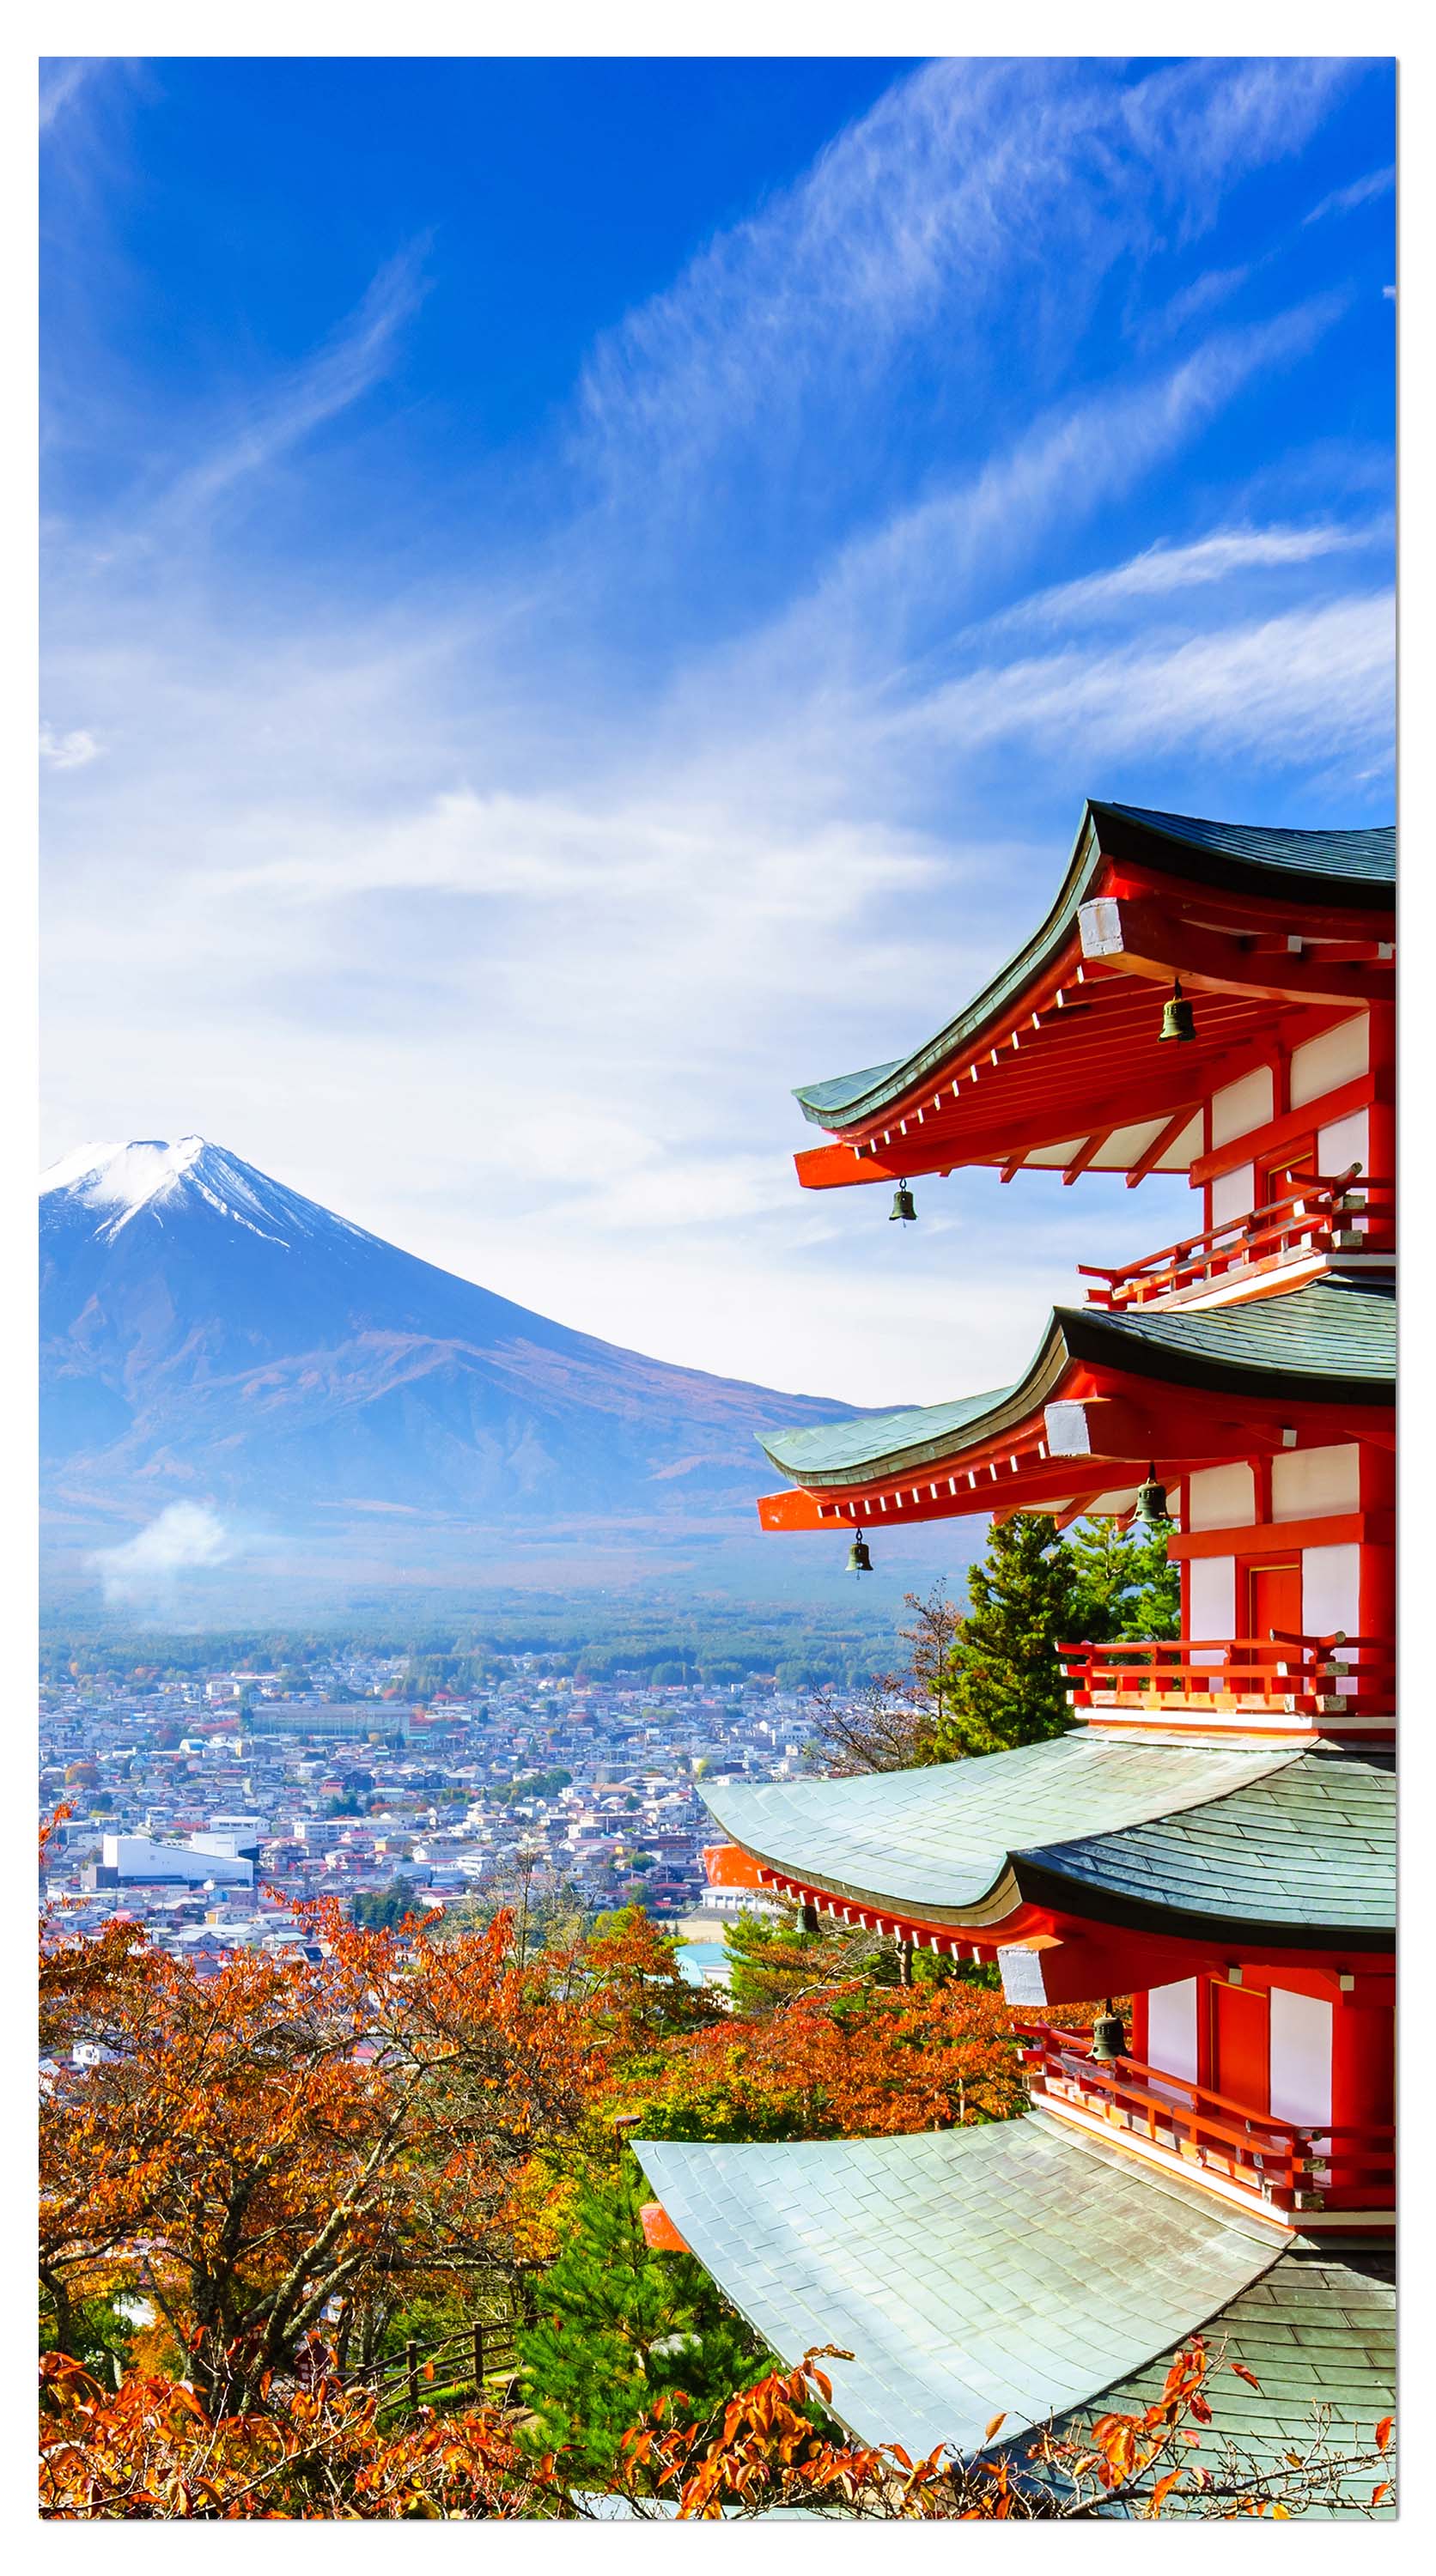 Garderobe Mount Fuji-Chureito Pagoda M0552 entdecken - Bild 4